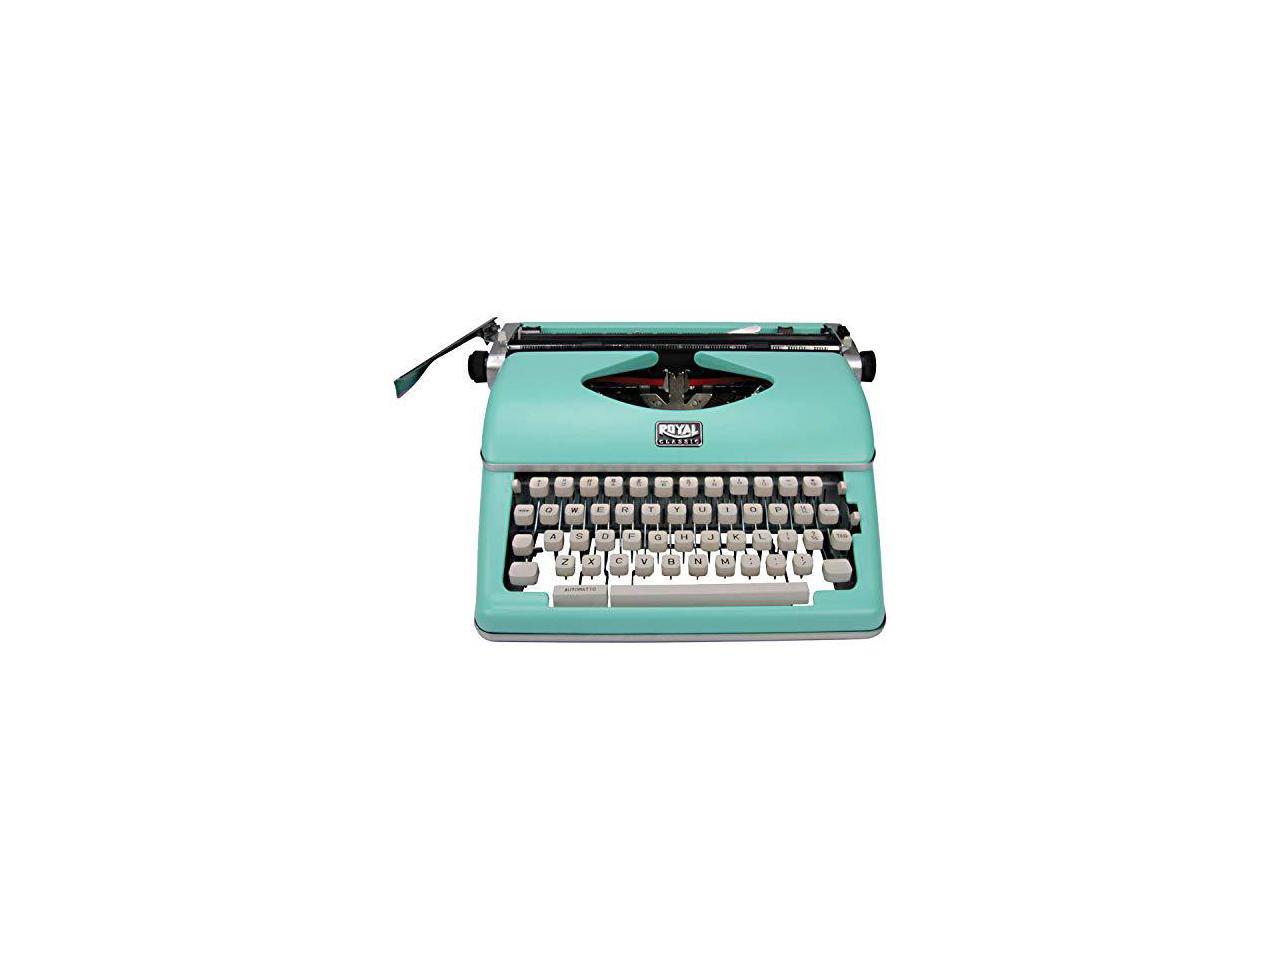 Royal 79101t Classic Manual Typewriter mint Green 